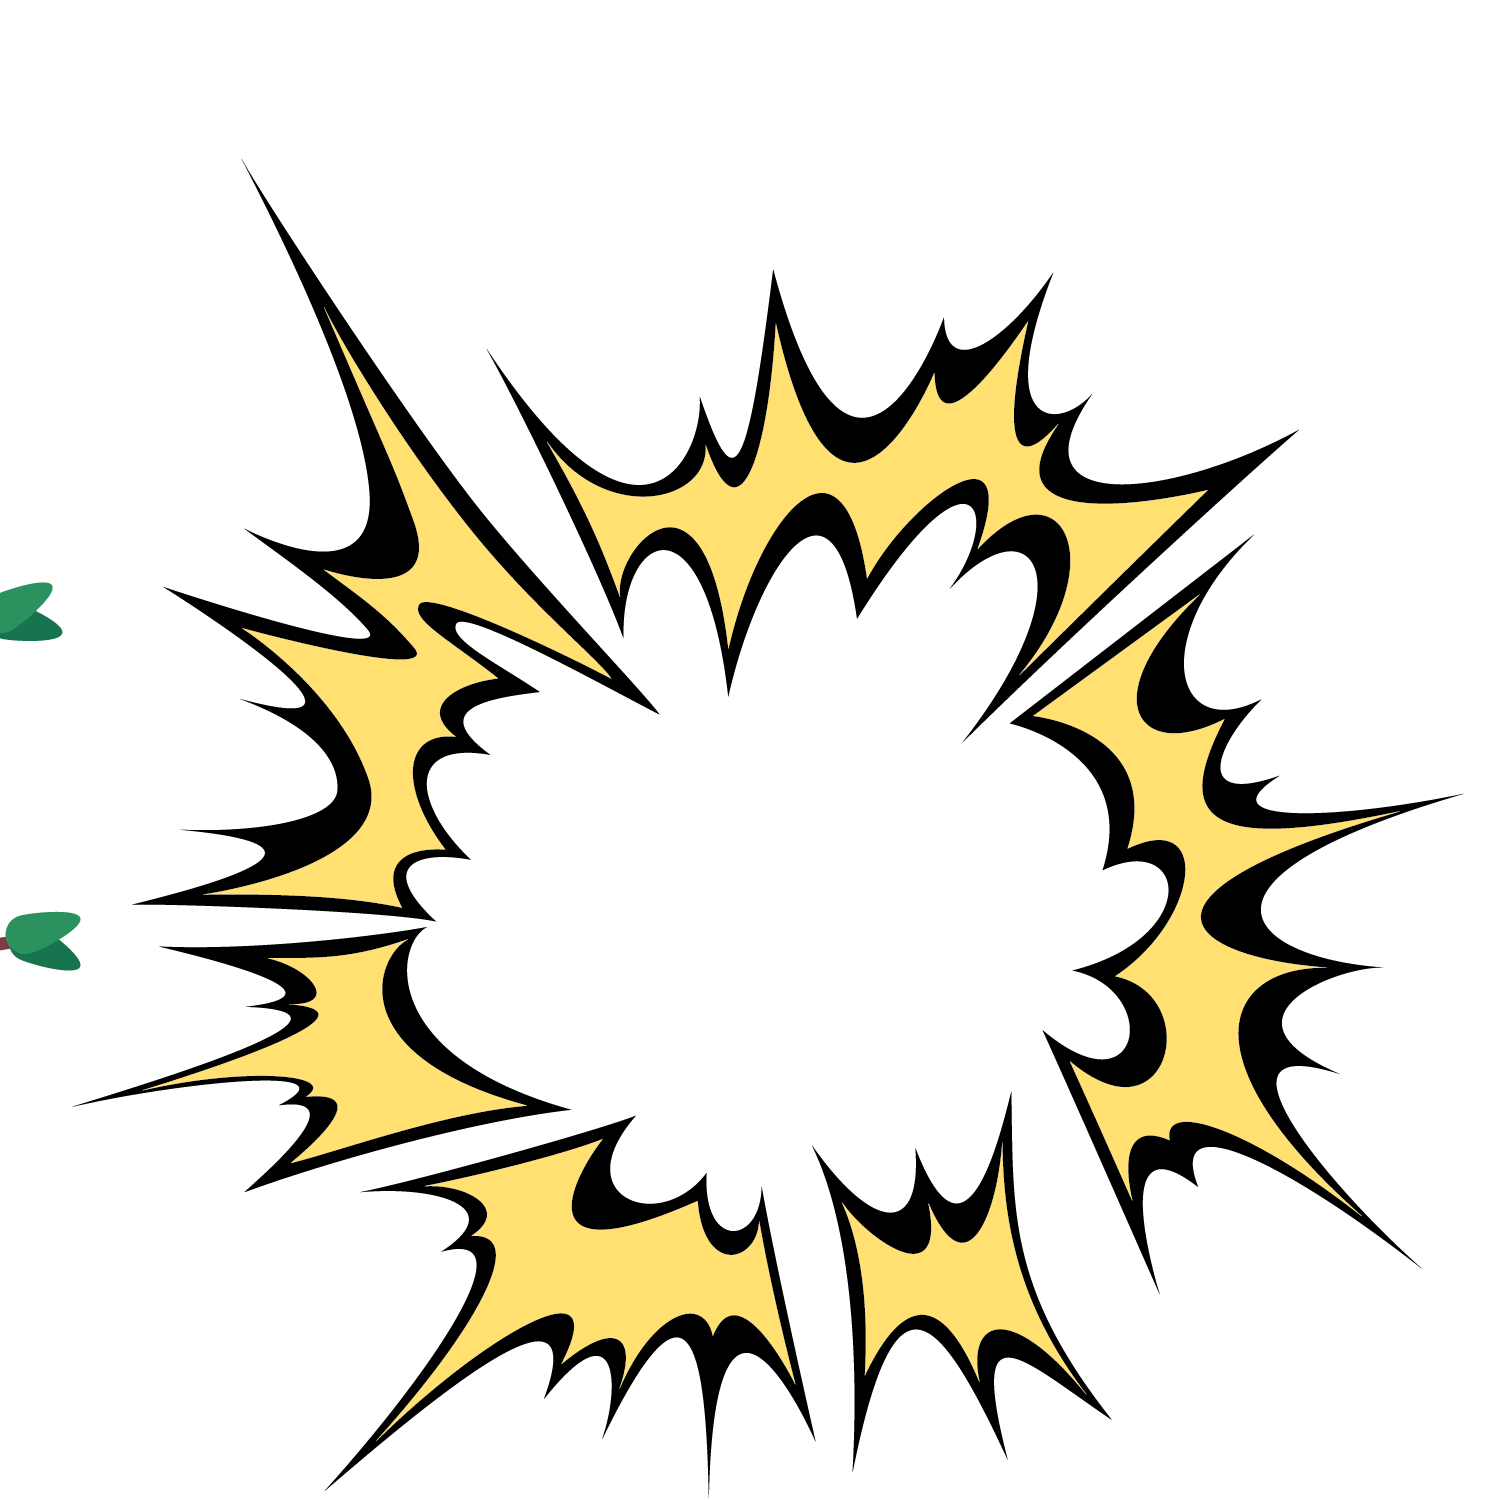 Explosion Symmetry Point Balloon Speech Cartoon PNG Image